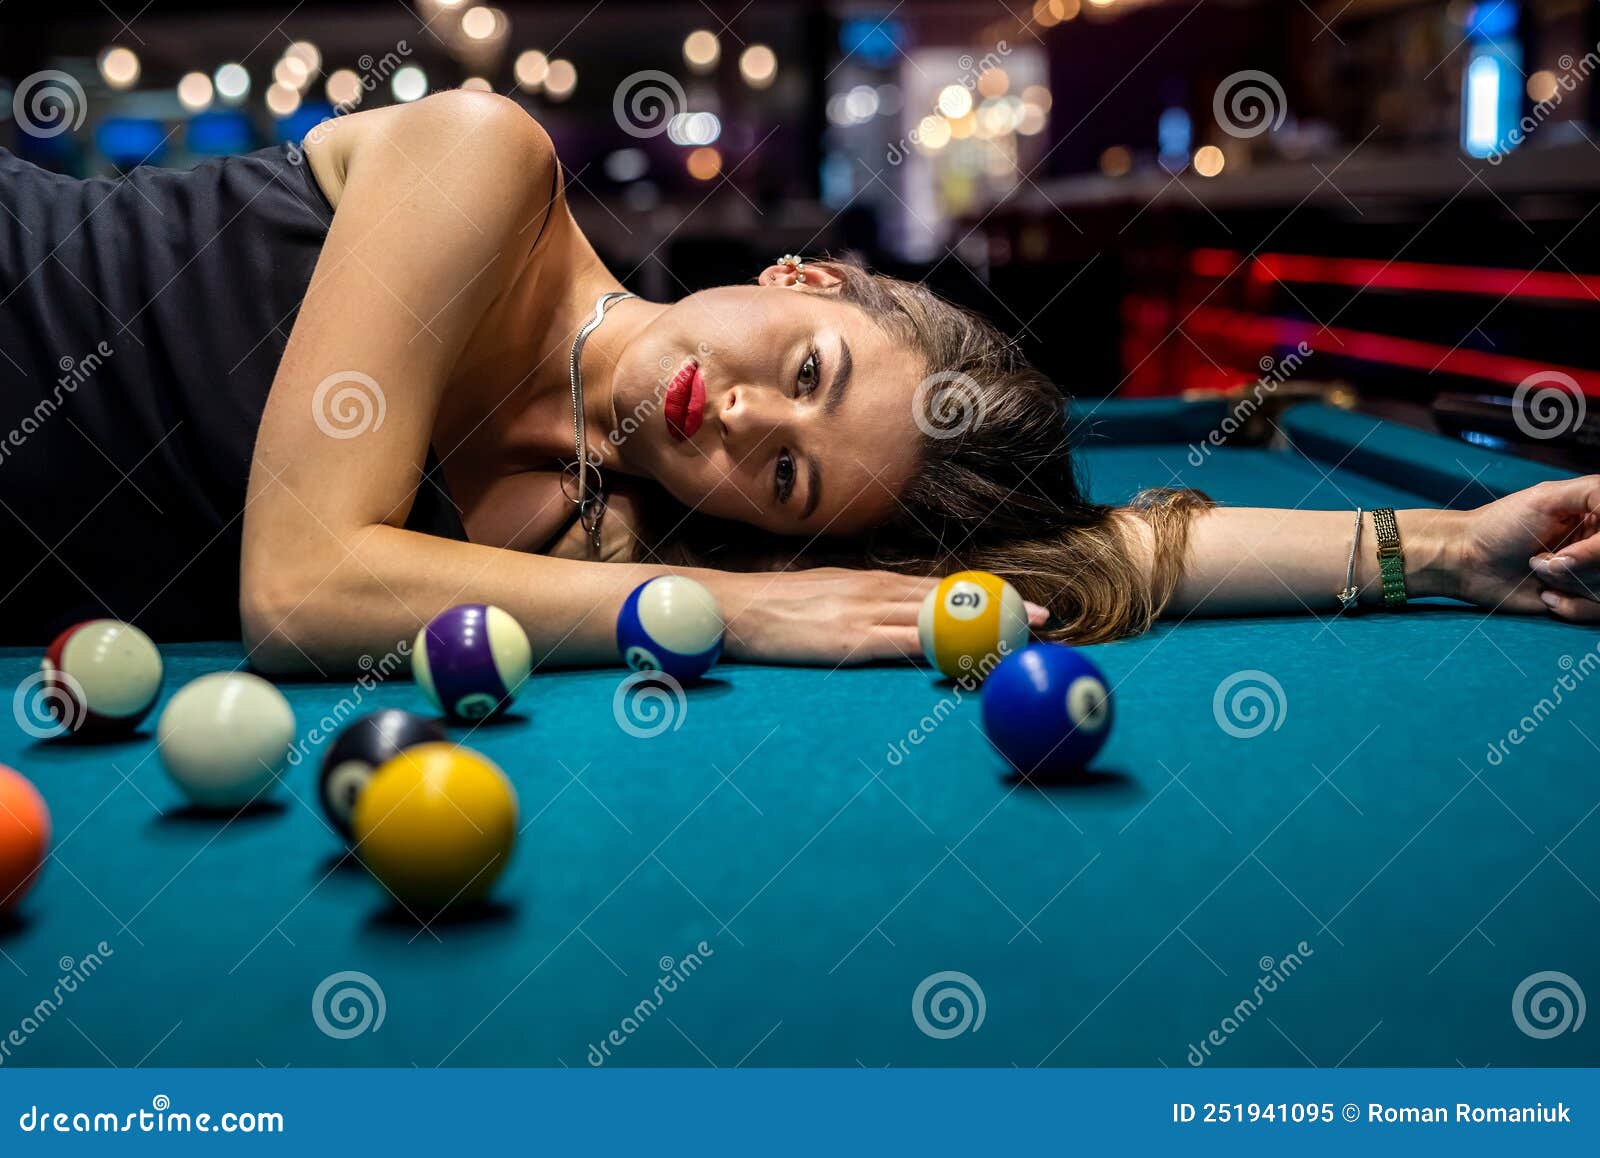 Beautiful Woman In Elegant Black Dress Lying On The Billiard Table Stock Image Image Of